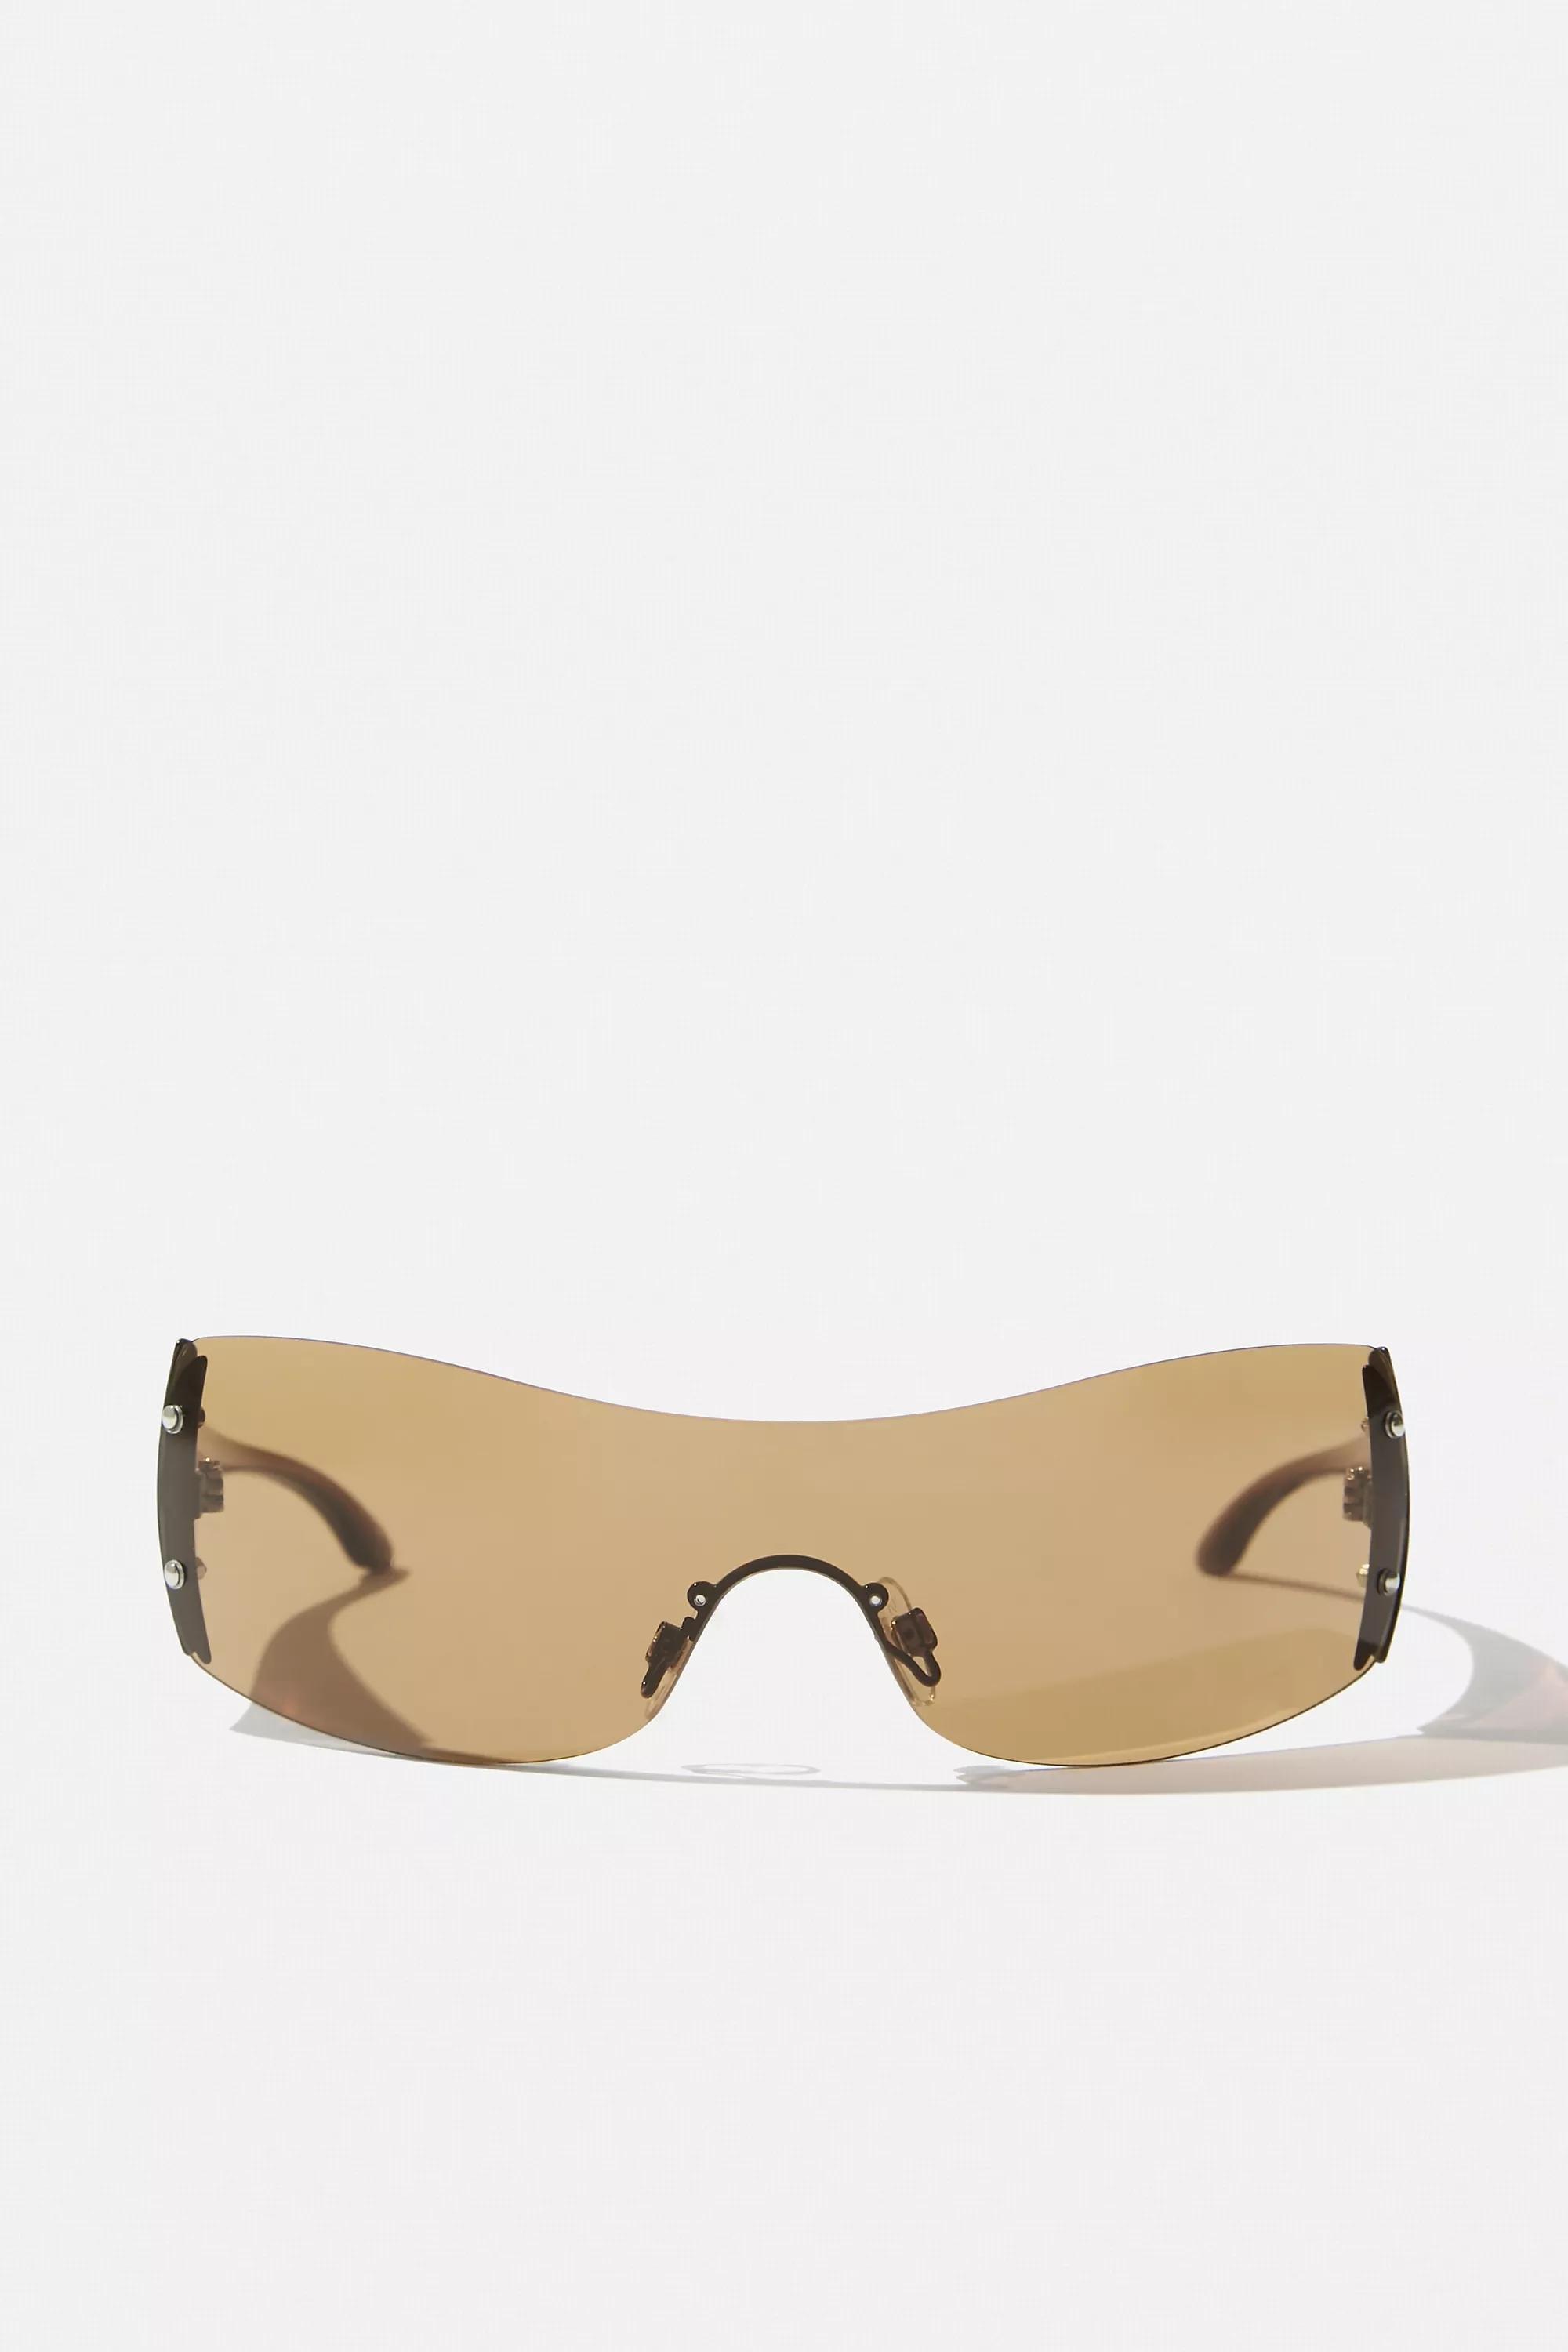 Urban Outfitters - Brown Eloise Visor Sunglasses